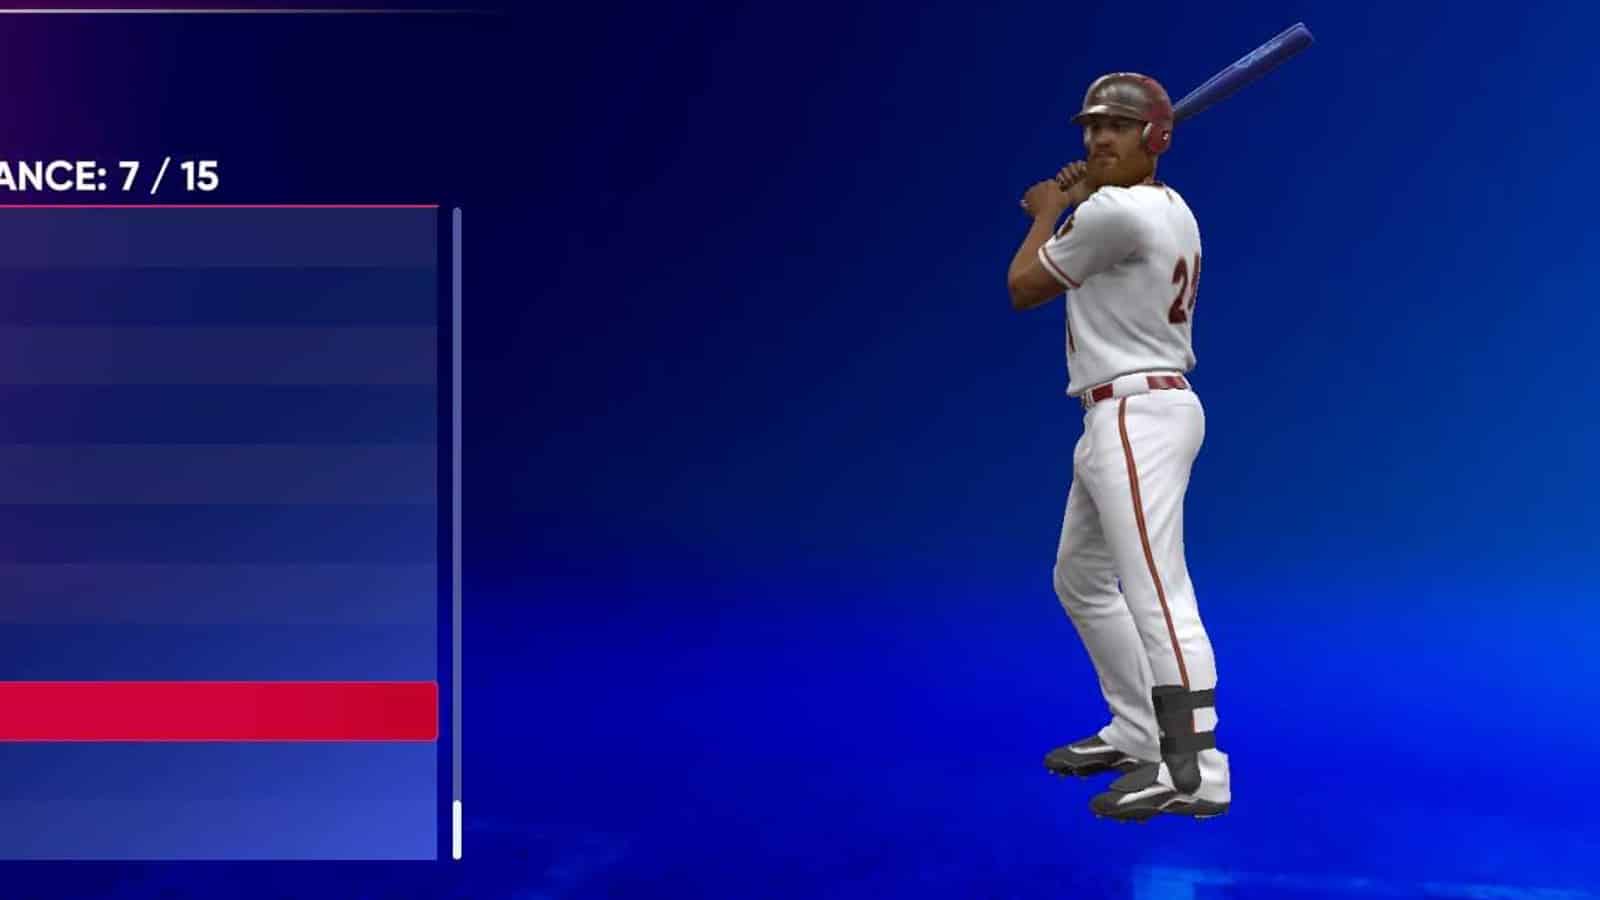 CHipper JOnes's 2008 Batting stance in MLB the Show